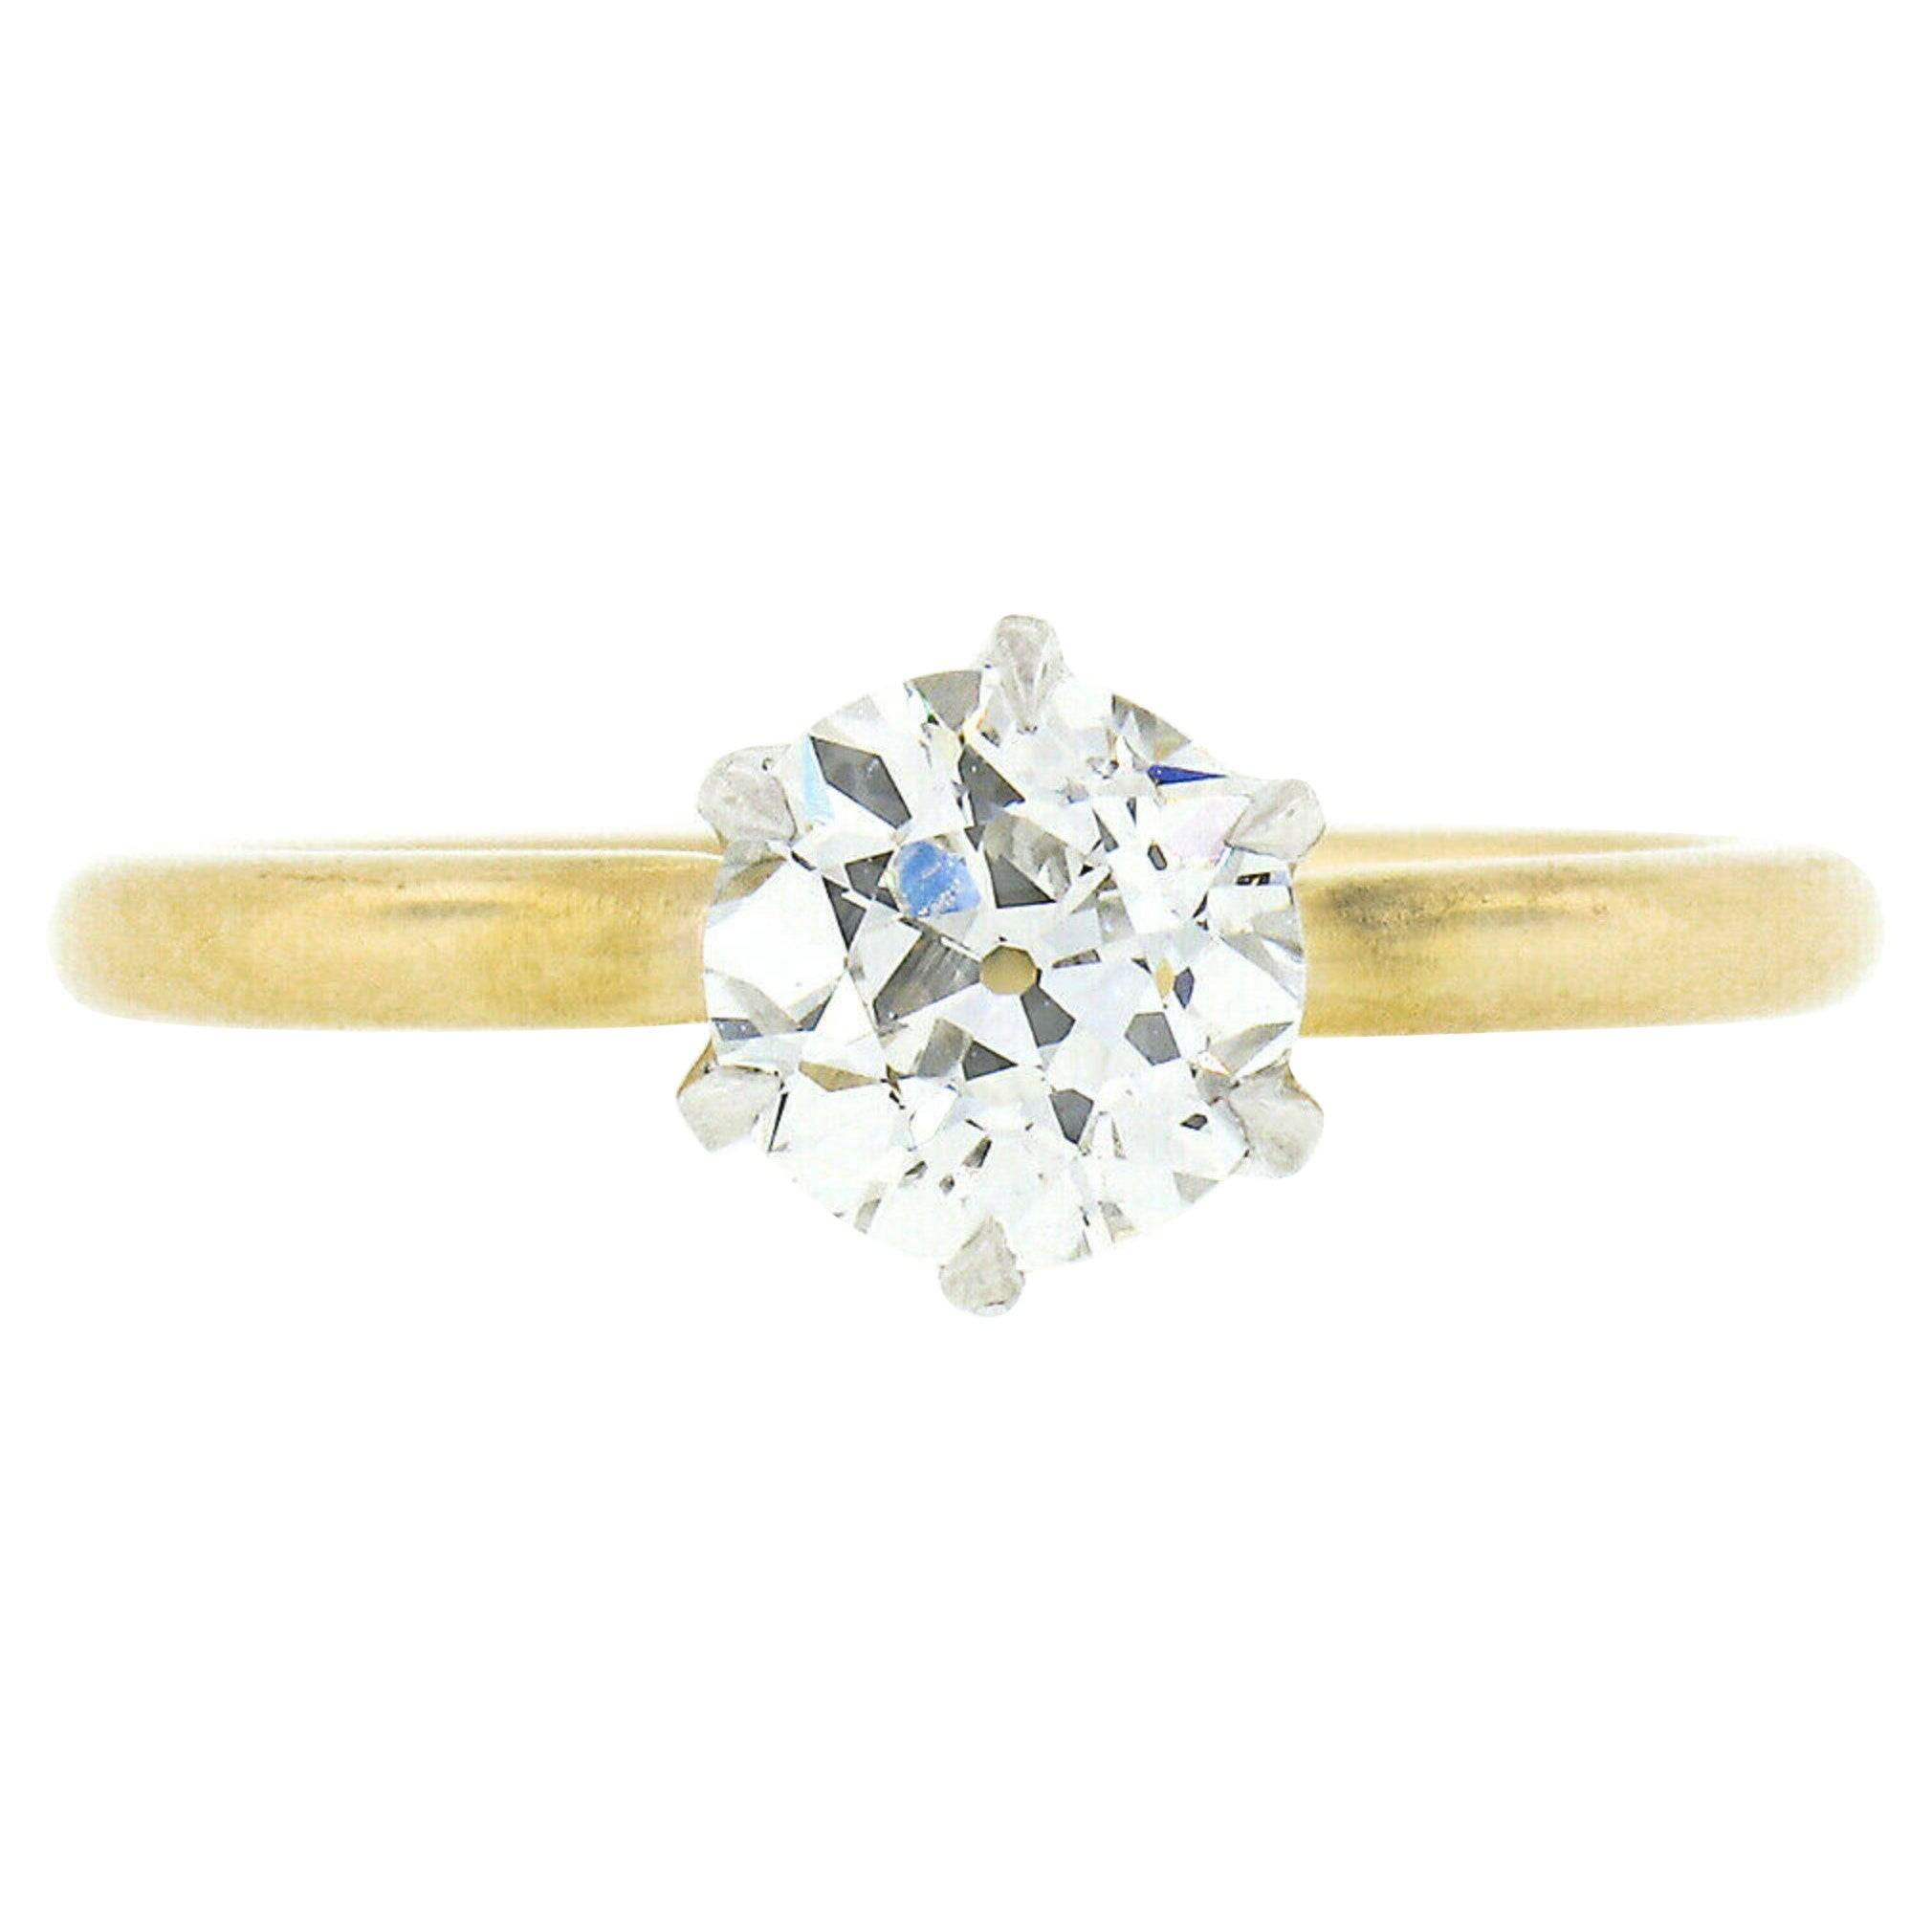 Antique Tiffany & Co. 18k Gold Platinum GIA Old European Diamond Engagement Ring